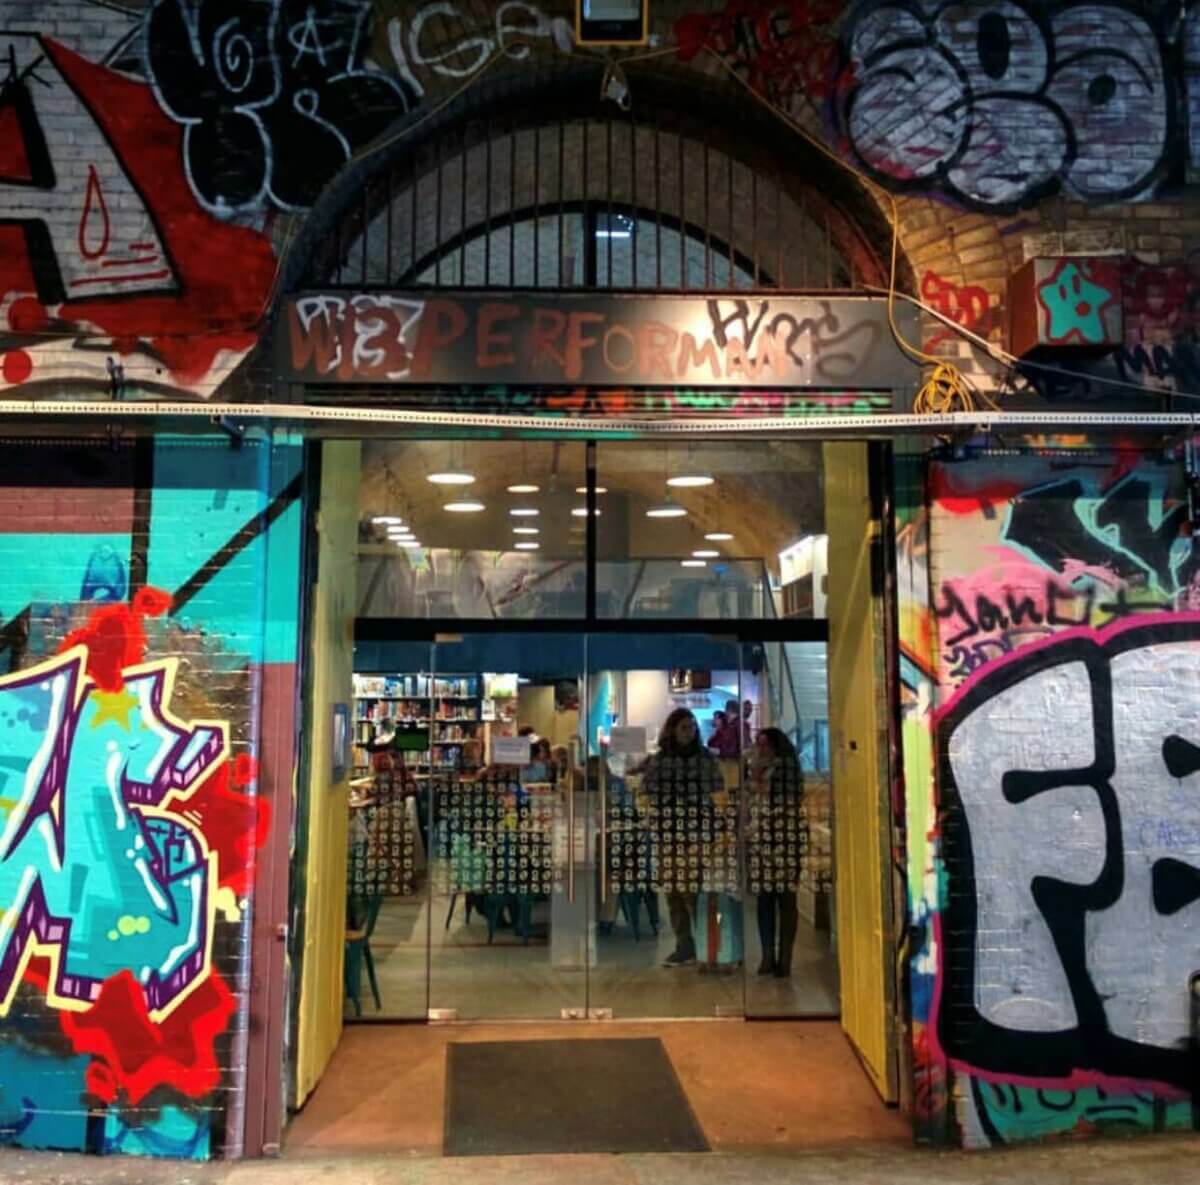 Graffiti-covered entrance.